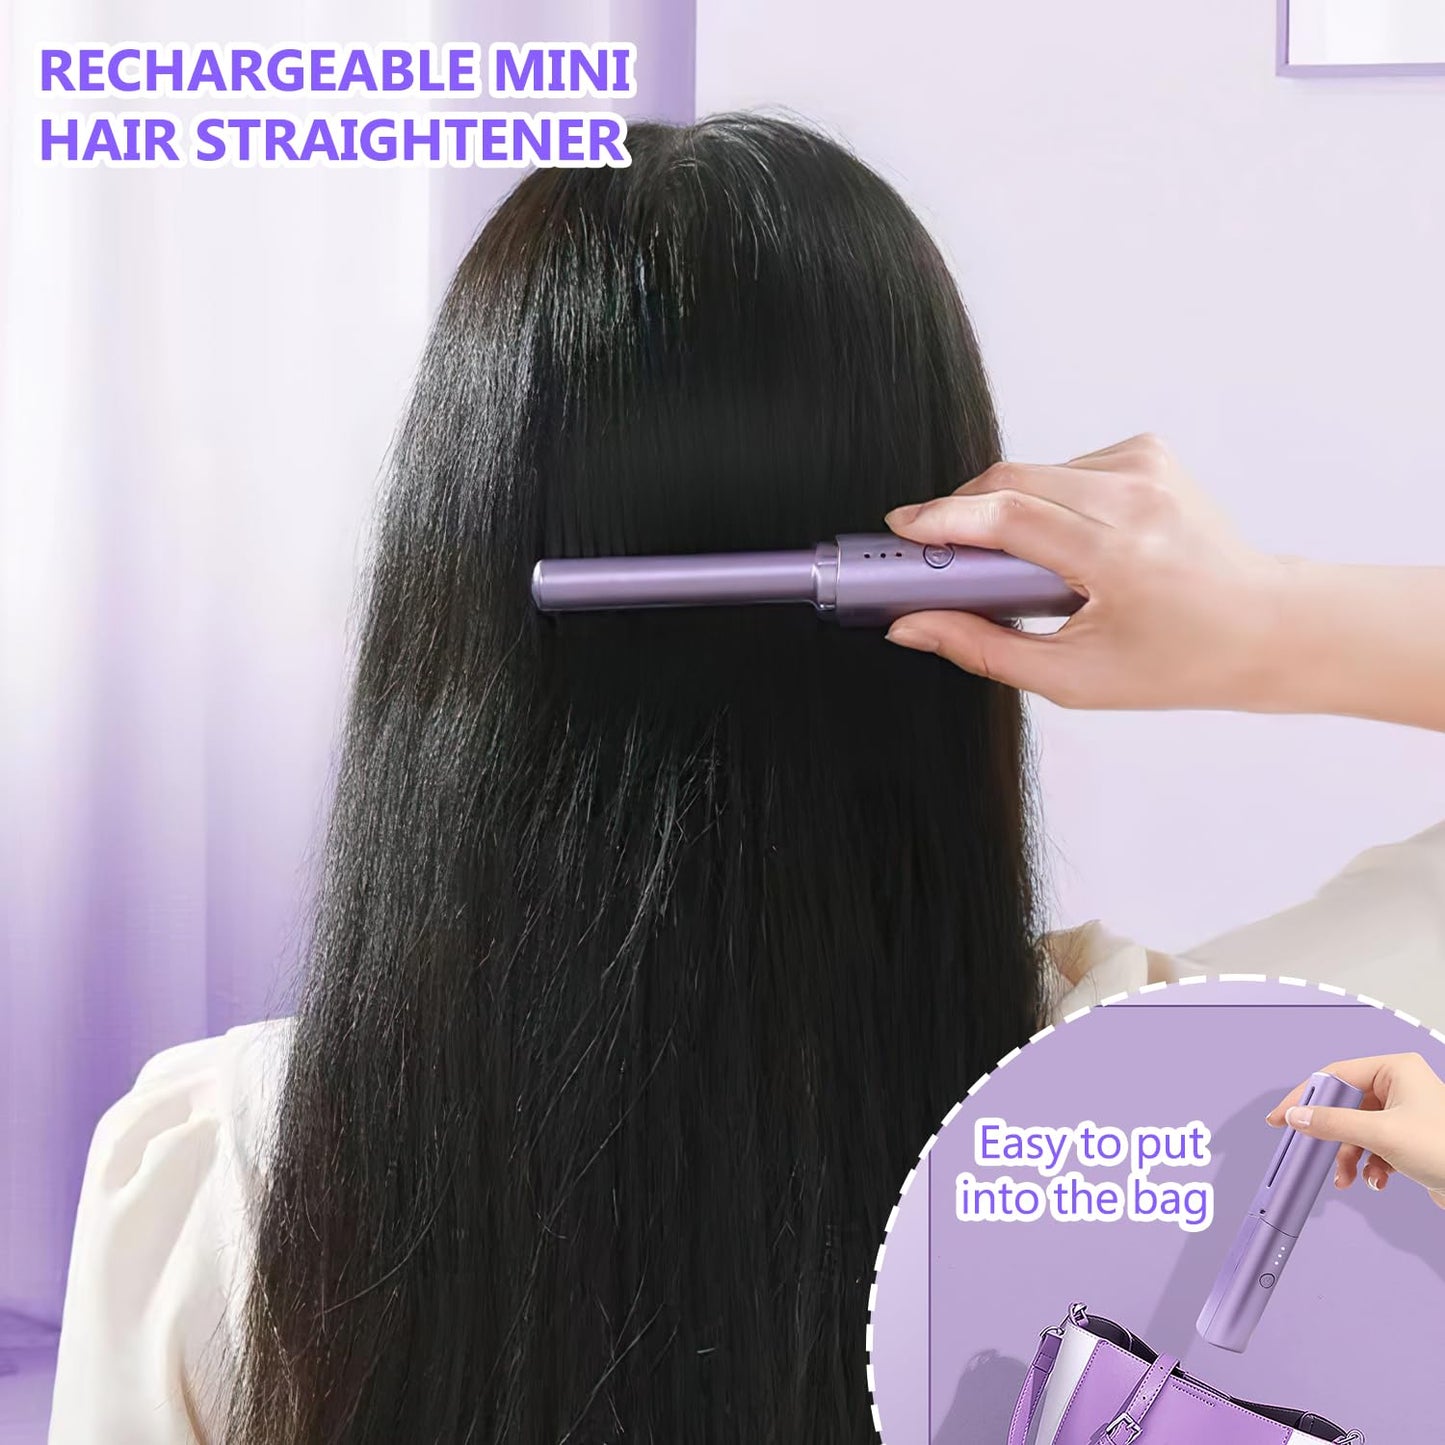 Rechargeable Mini Hair Straightener